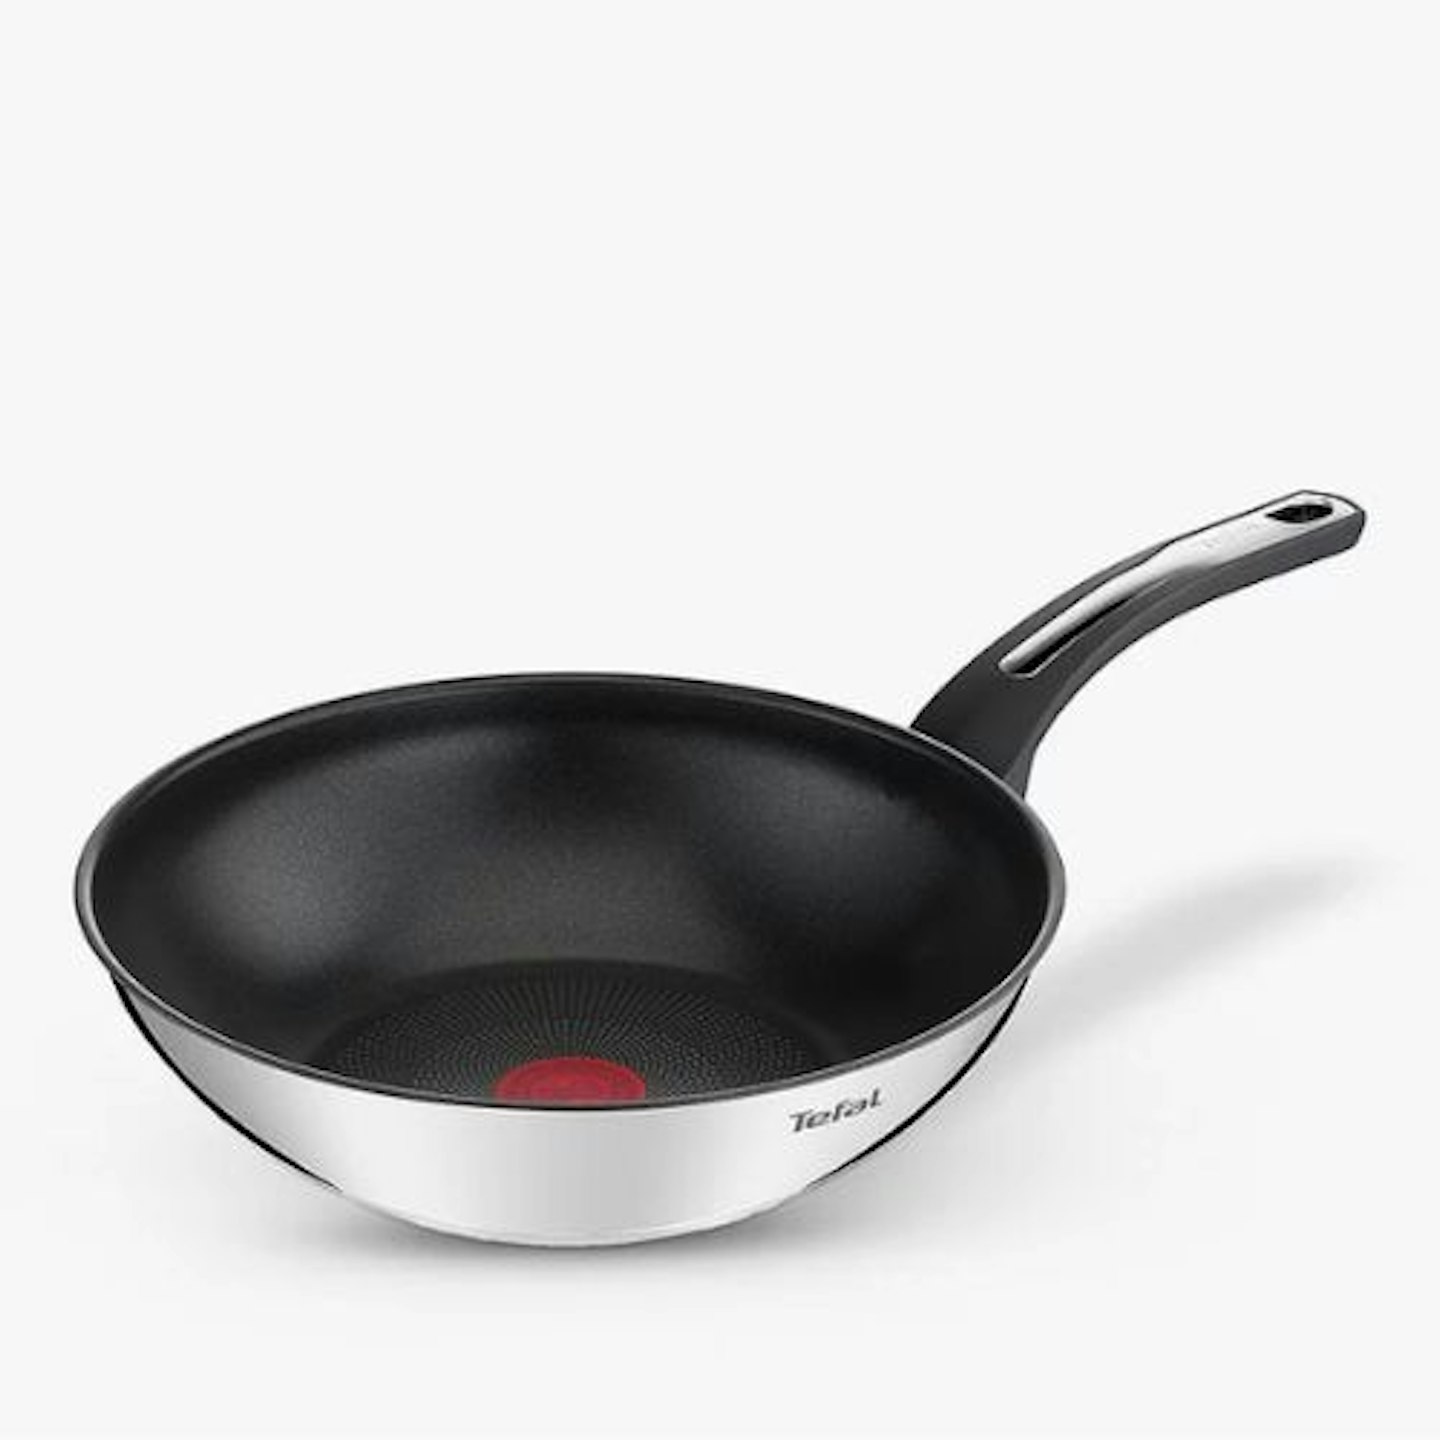 Tefal Emotion Stainless Steel Non-Stick Wok / Stir Frying Pan, 28cm